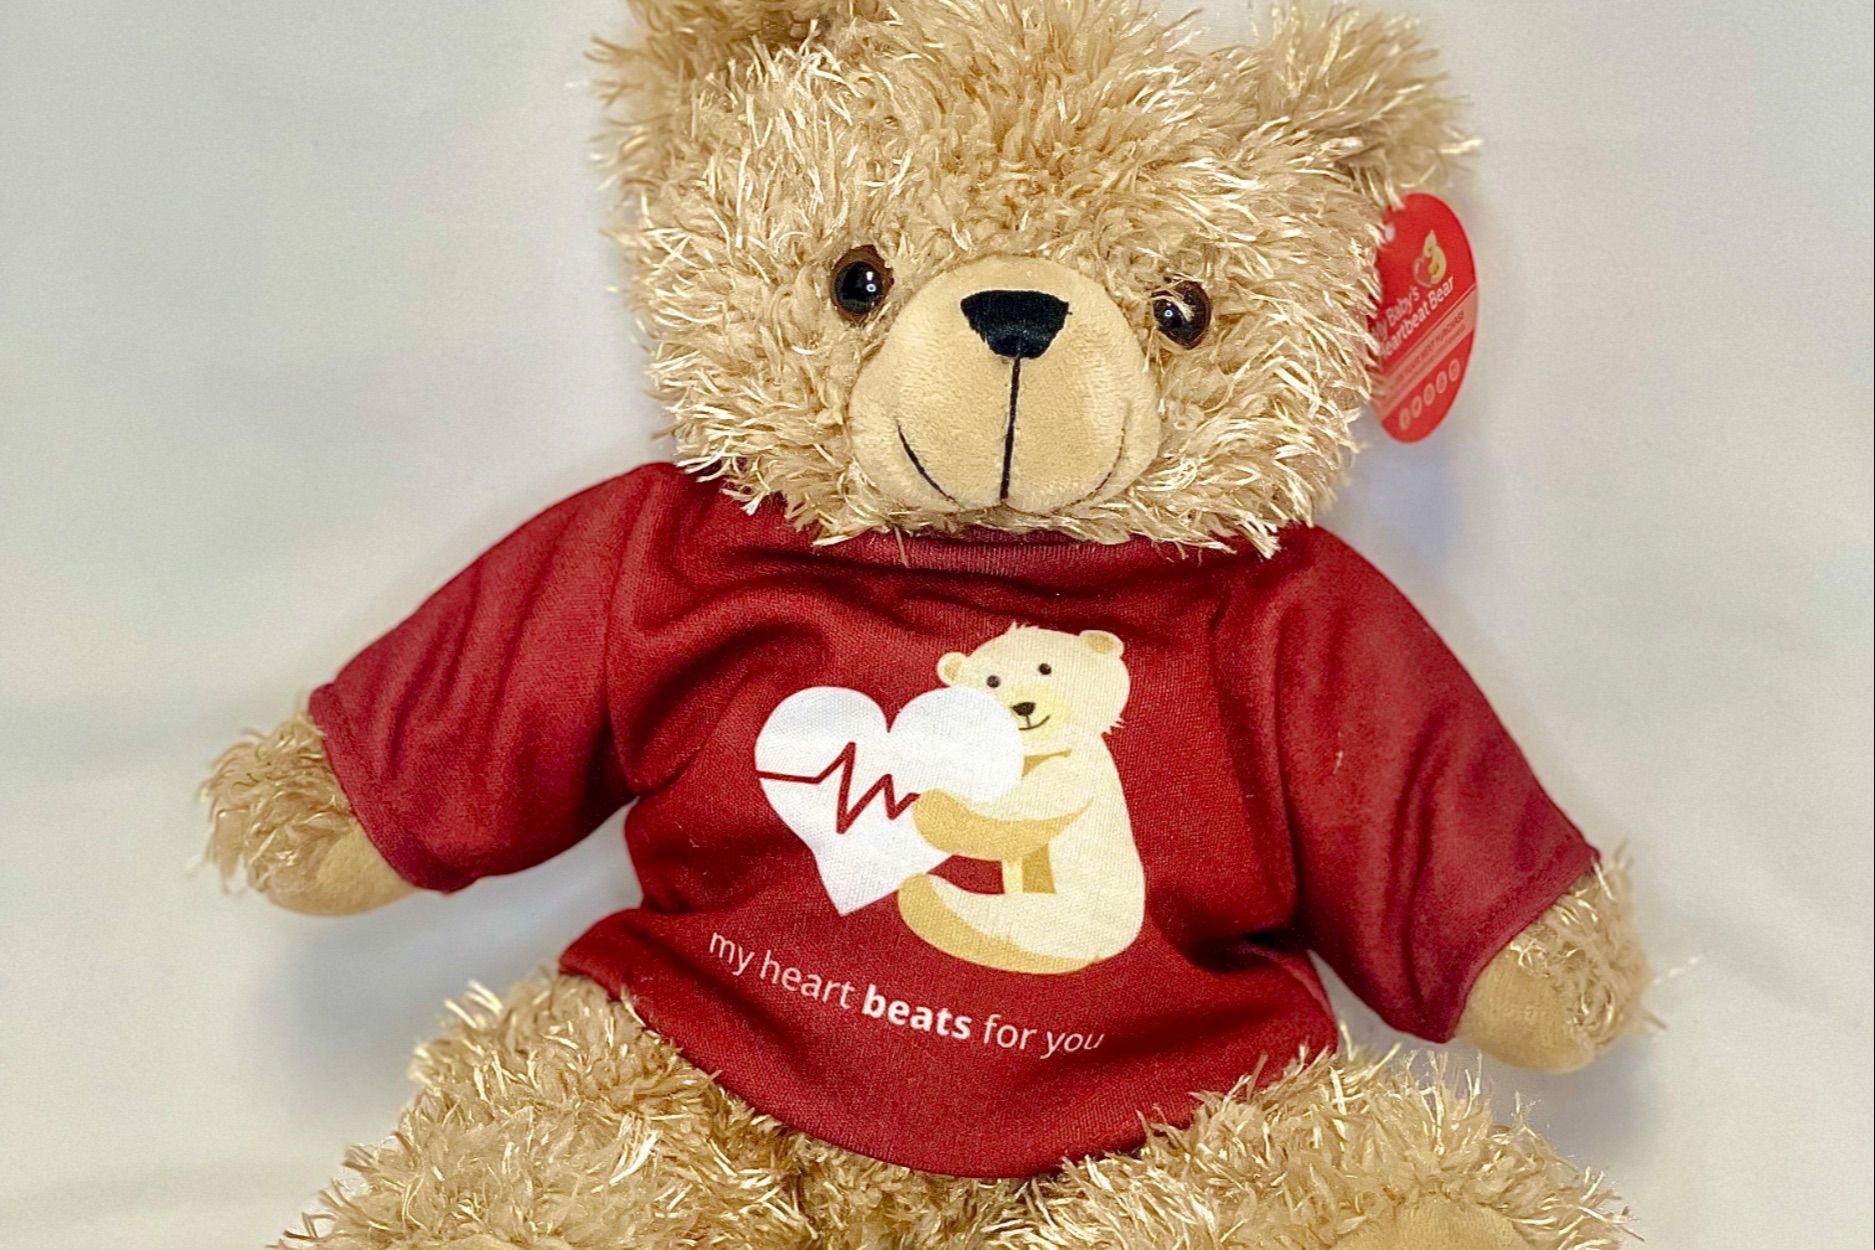 Heartbeat Teddy Bear Appointment portfolio